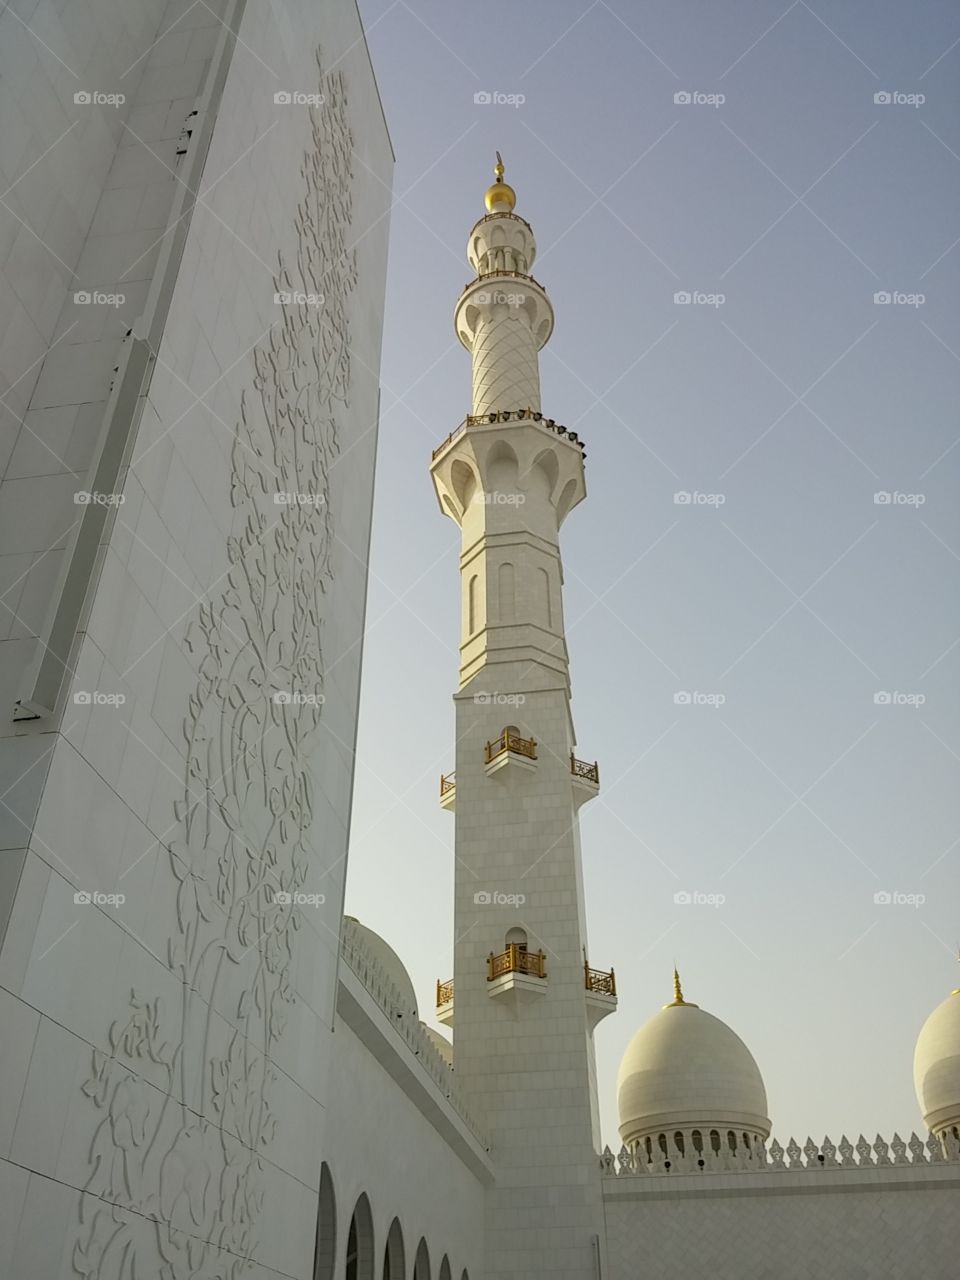 Grand Mosque Abu Dhabi. Recent visit to Abu Dhabi